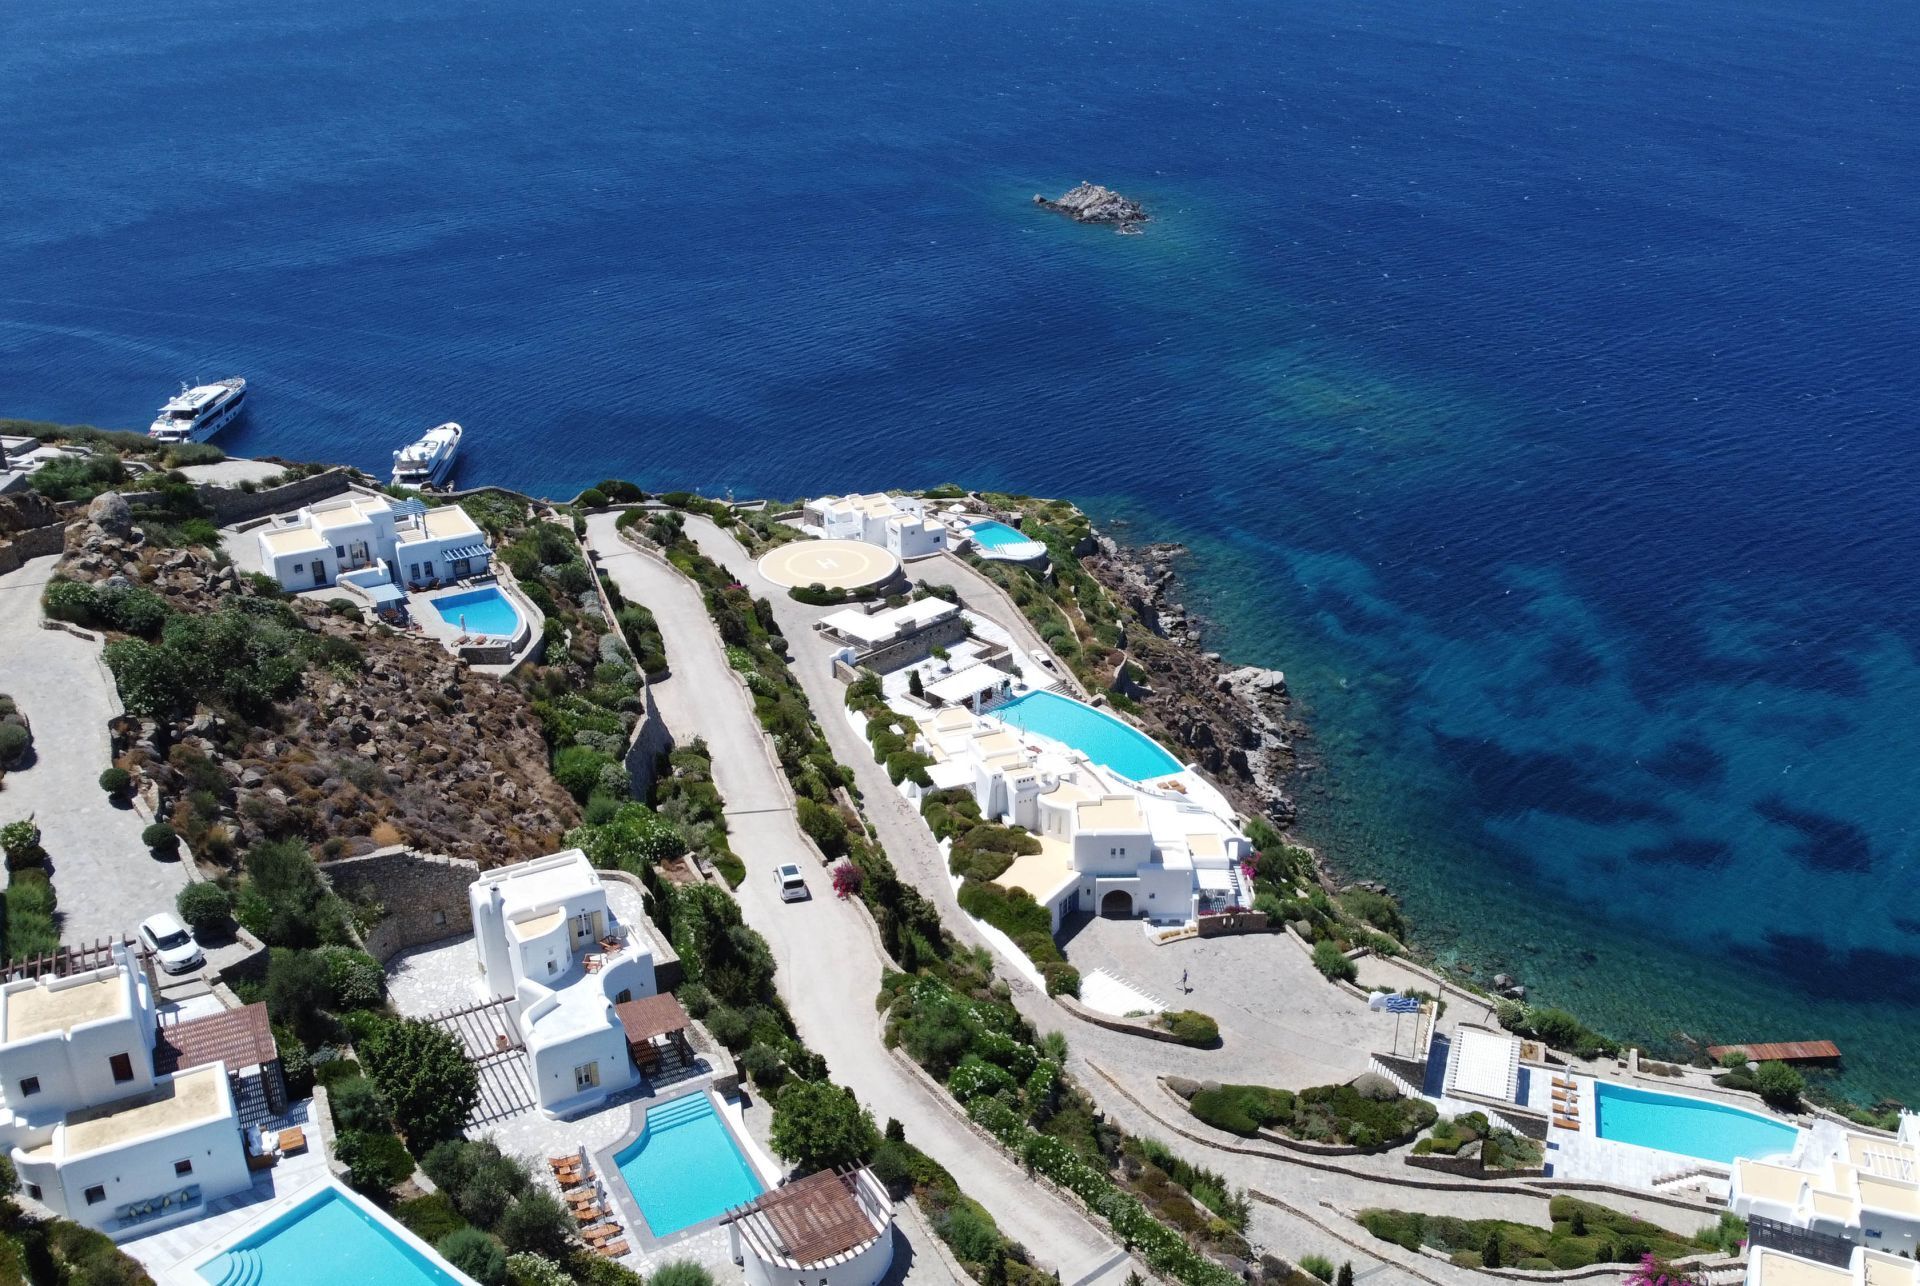 Hotels and villas in Agios Lazaros, in Mykonos, near Psarou Beach